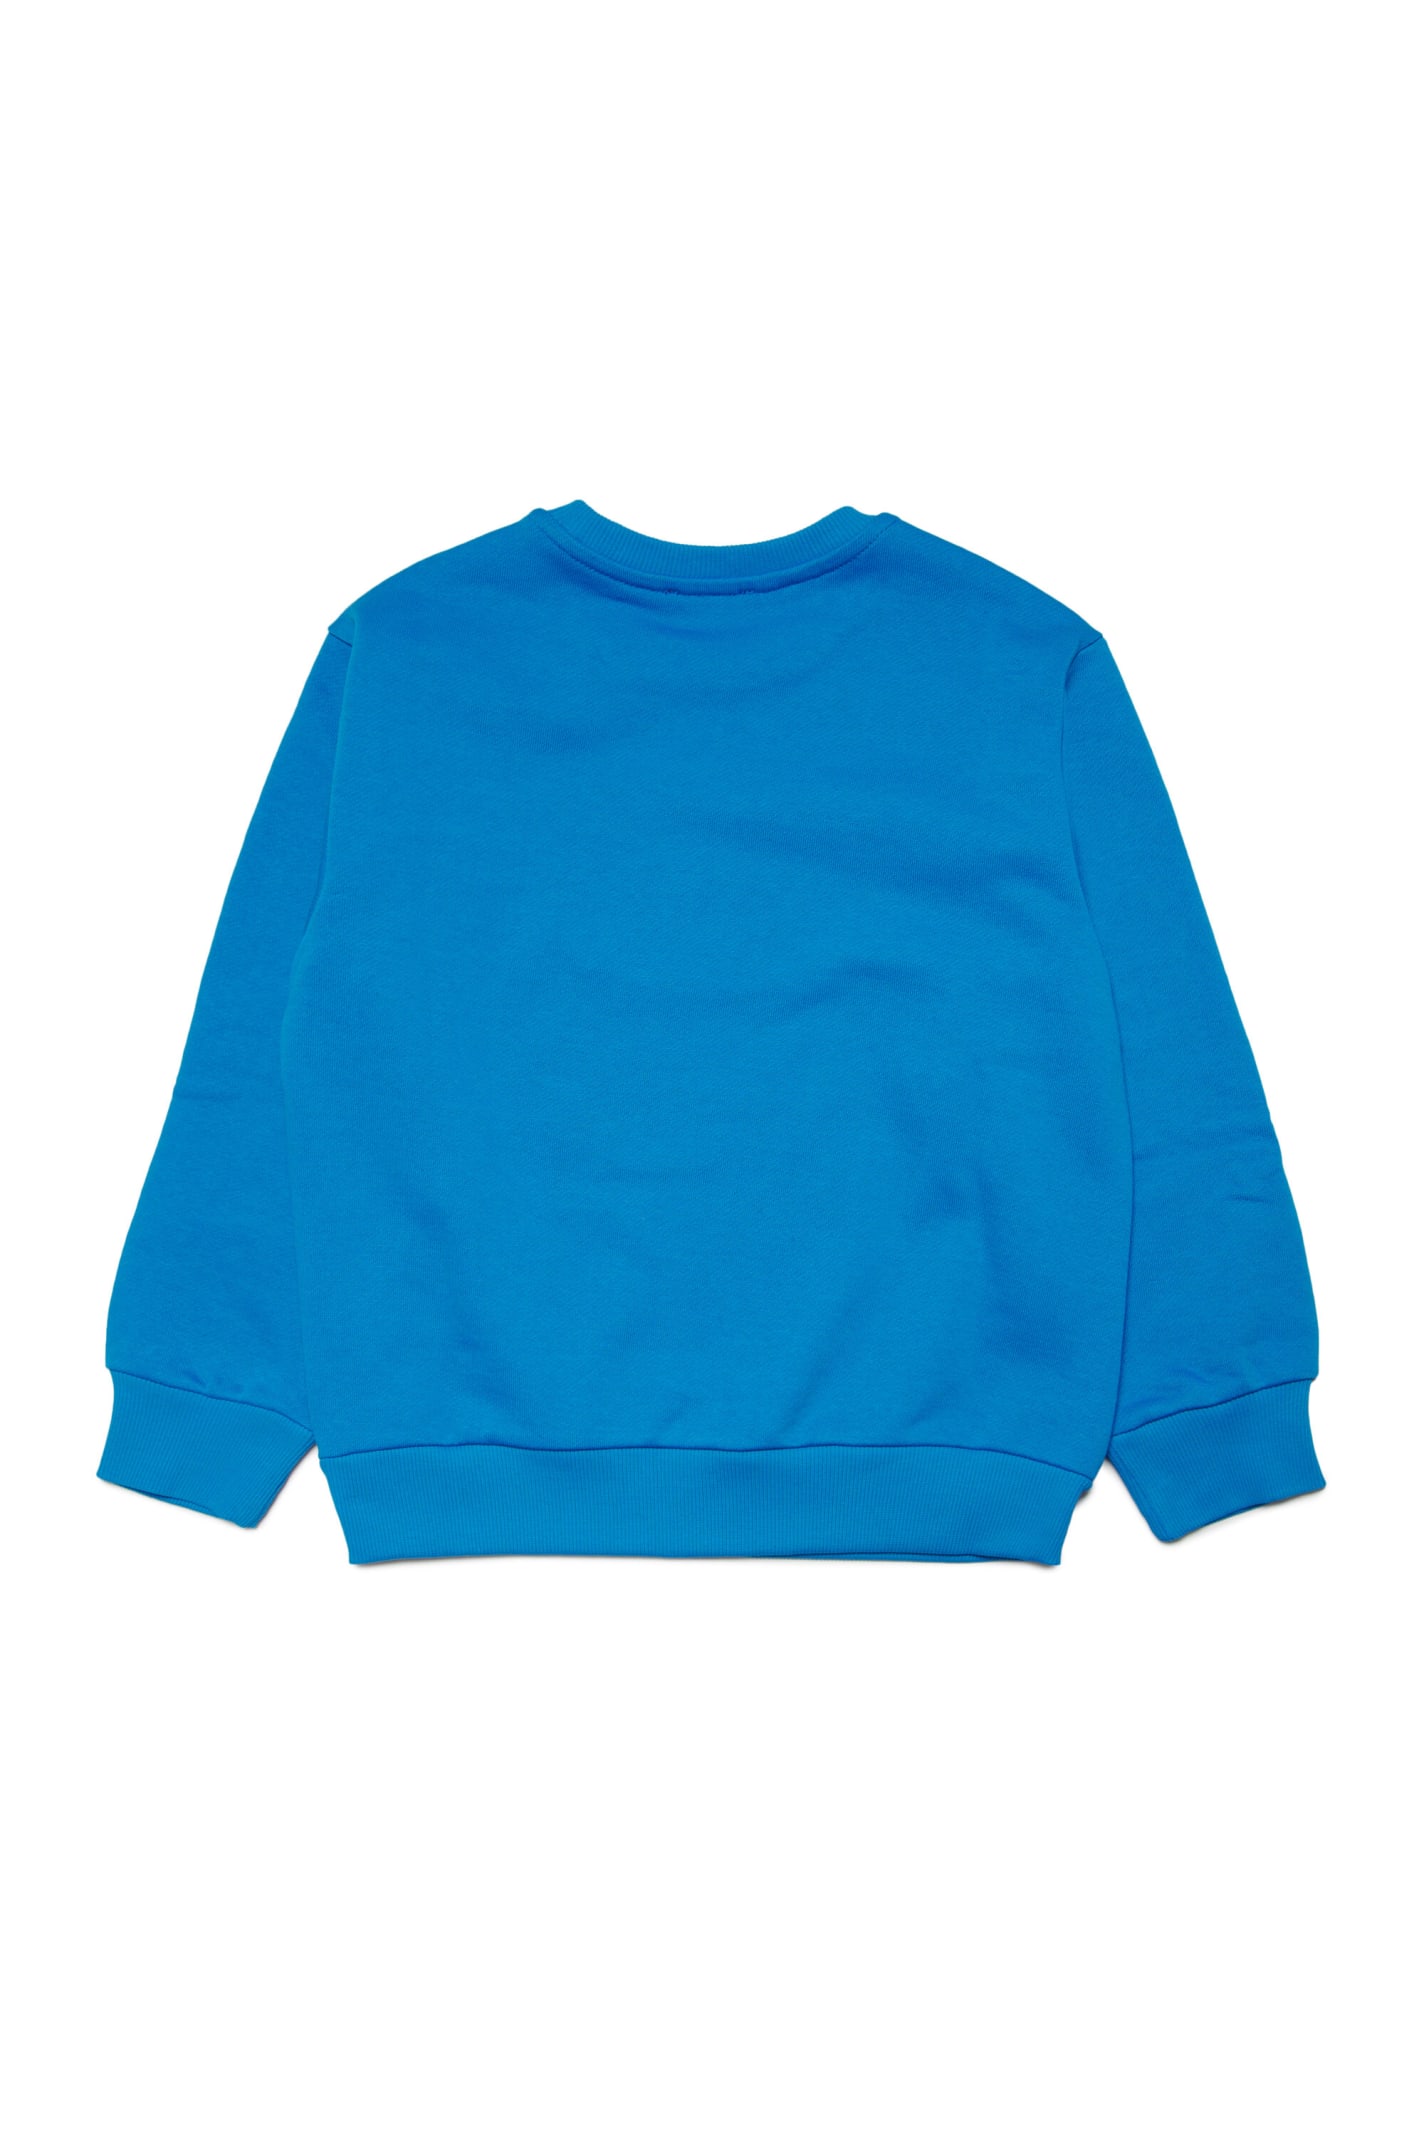 Shop Diesel Sbell Over Sweat-shirt  Crew-neck Sweatshirt With Puffy Print